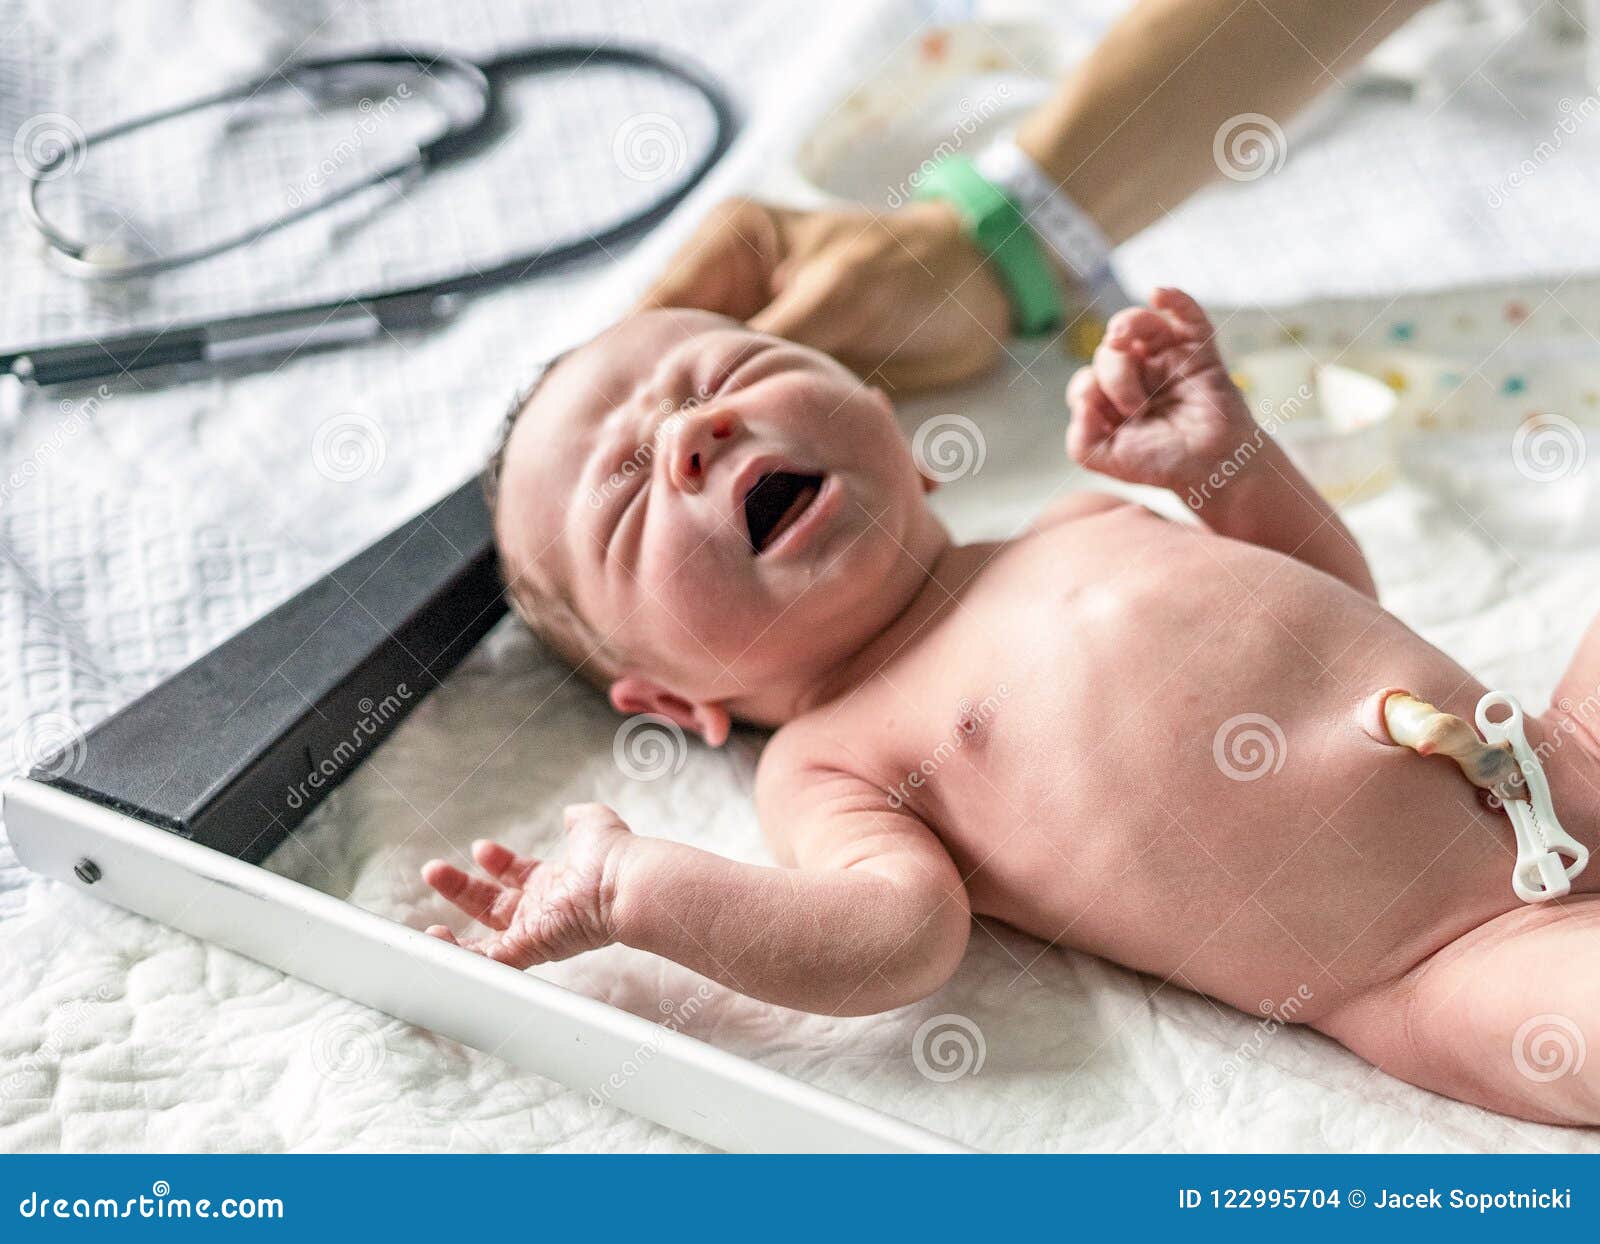 https://thumbs.dreamstime.com/z/measuring-height-newborn-baby-boy-measuring-height-newborn-baby-boy-hospital-122995704.jpg